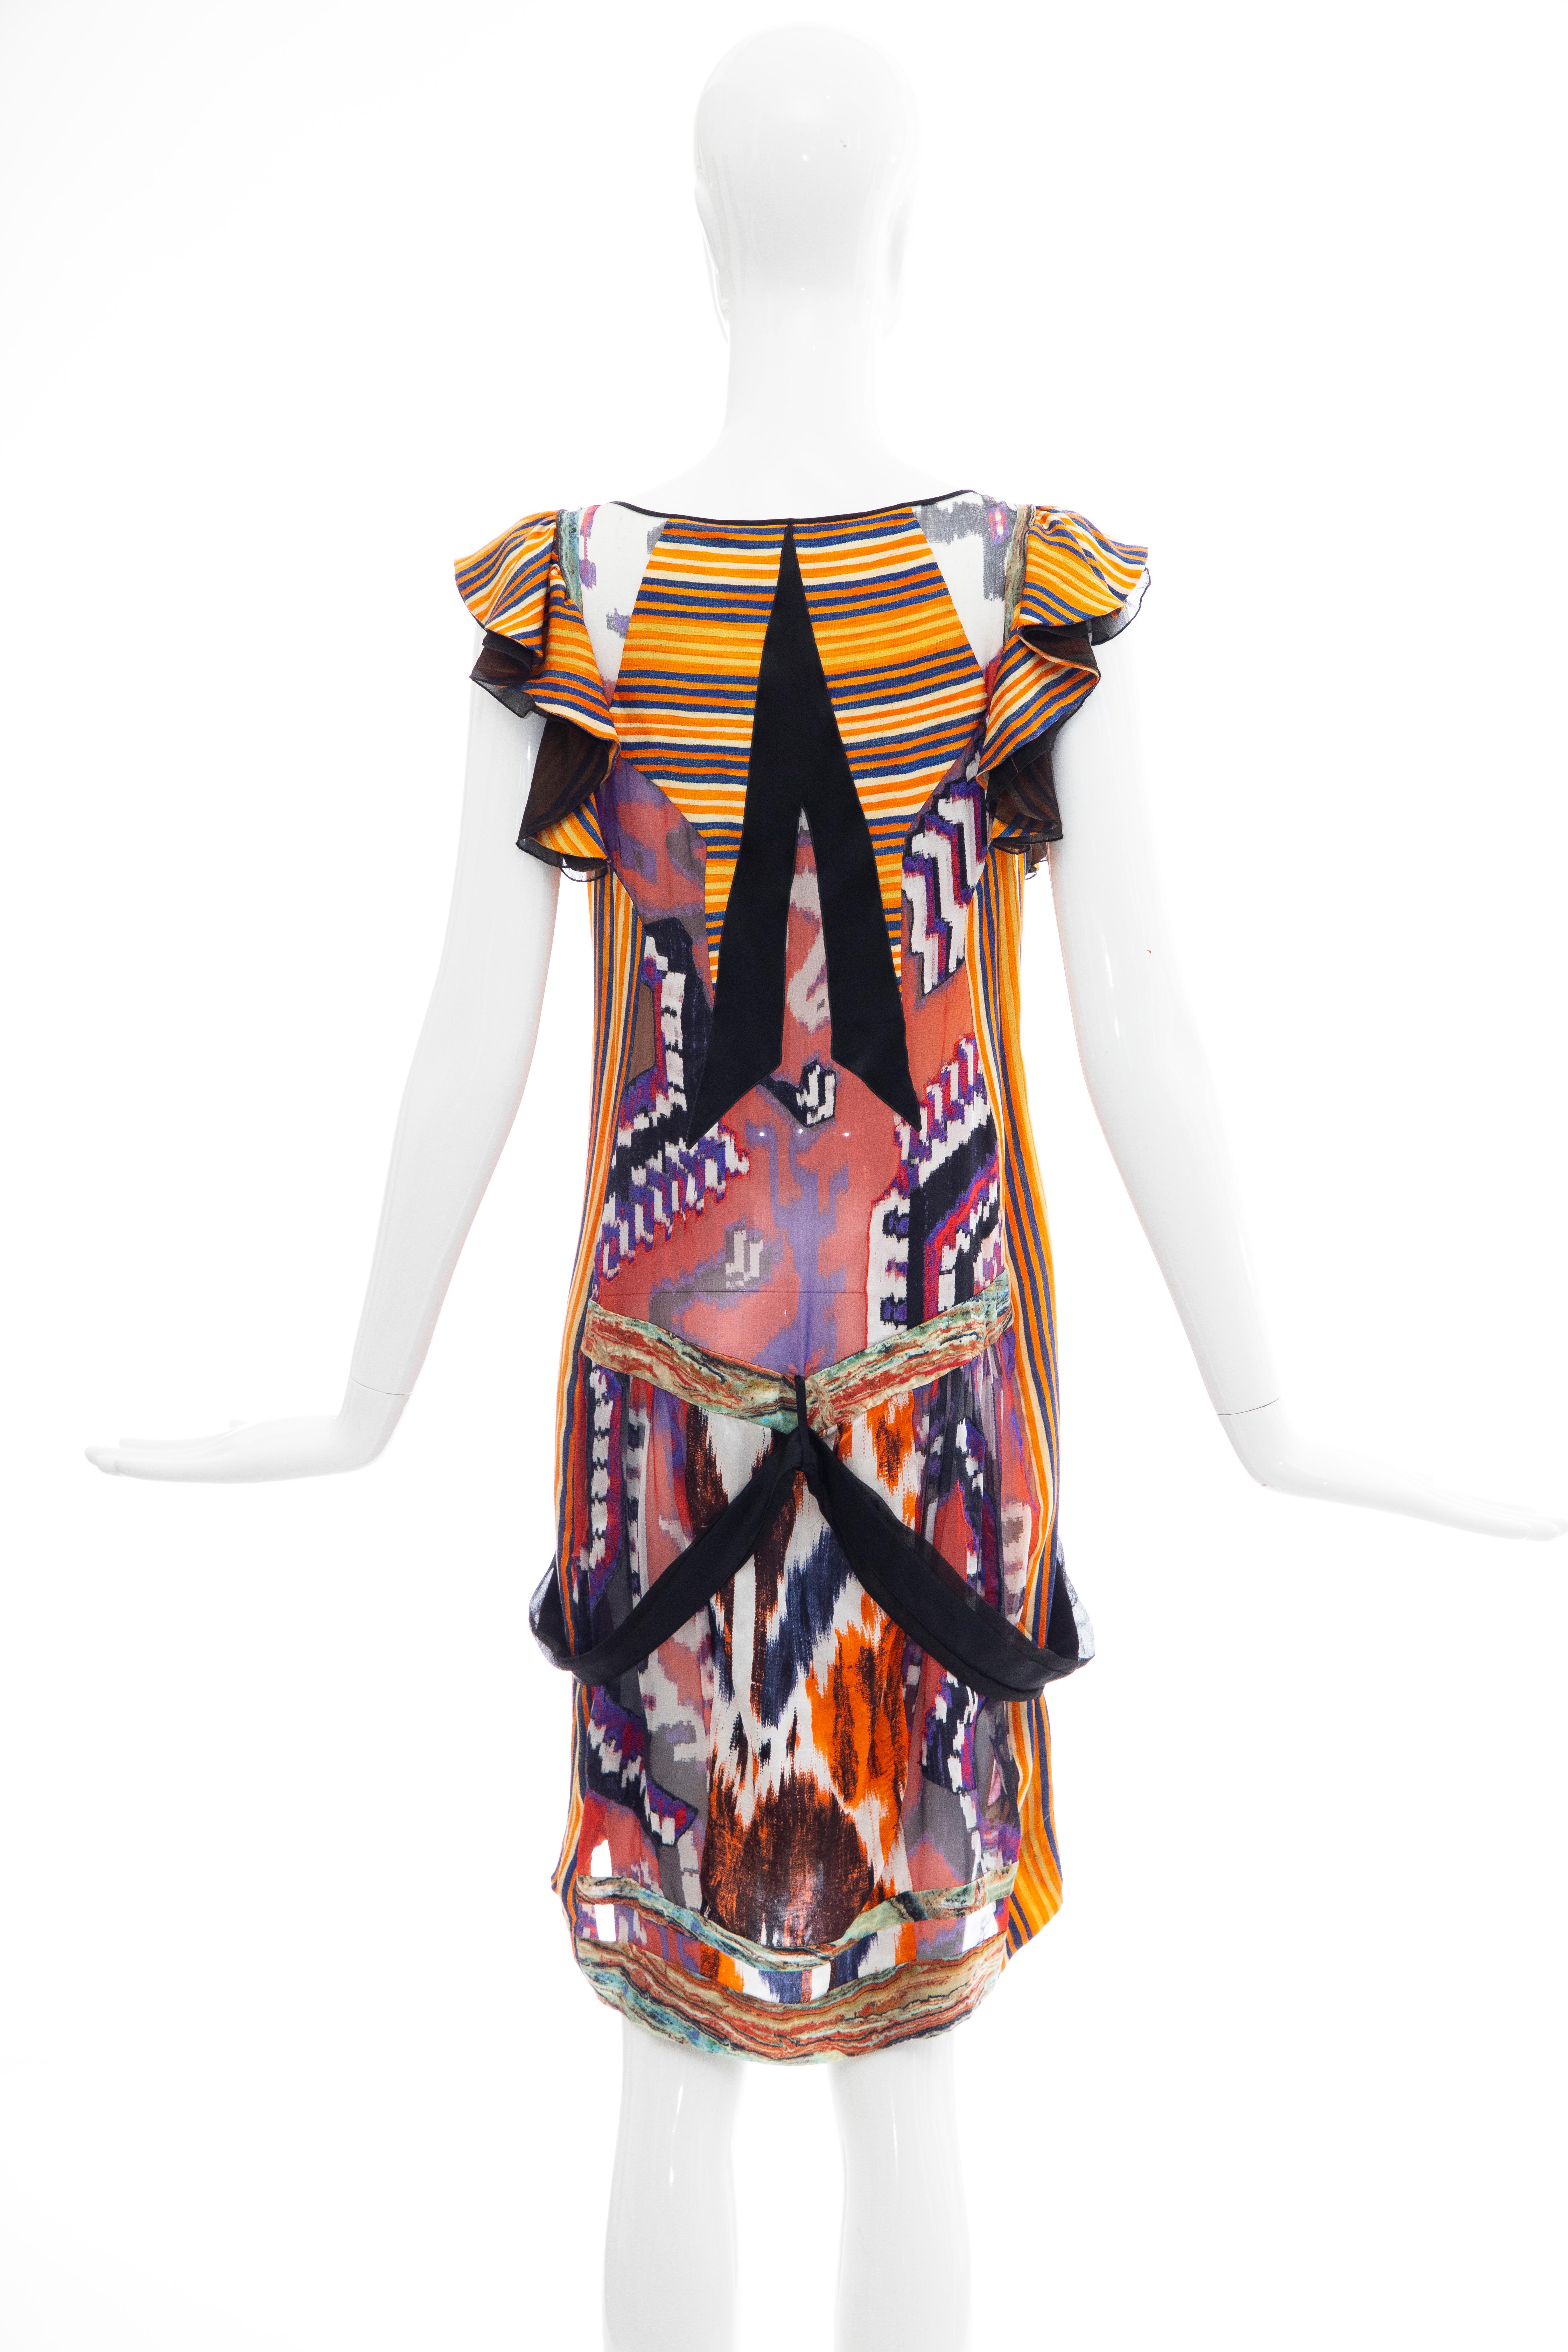  Nicolas Ghesquière for Balenciaga Runway Silk Ikat Print Dress, Fall 2007 2